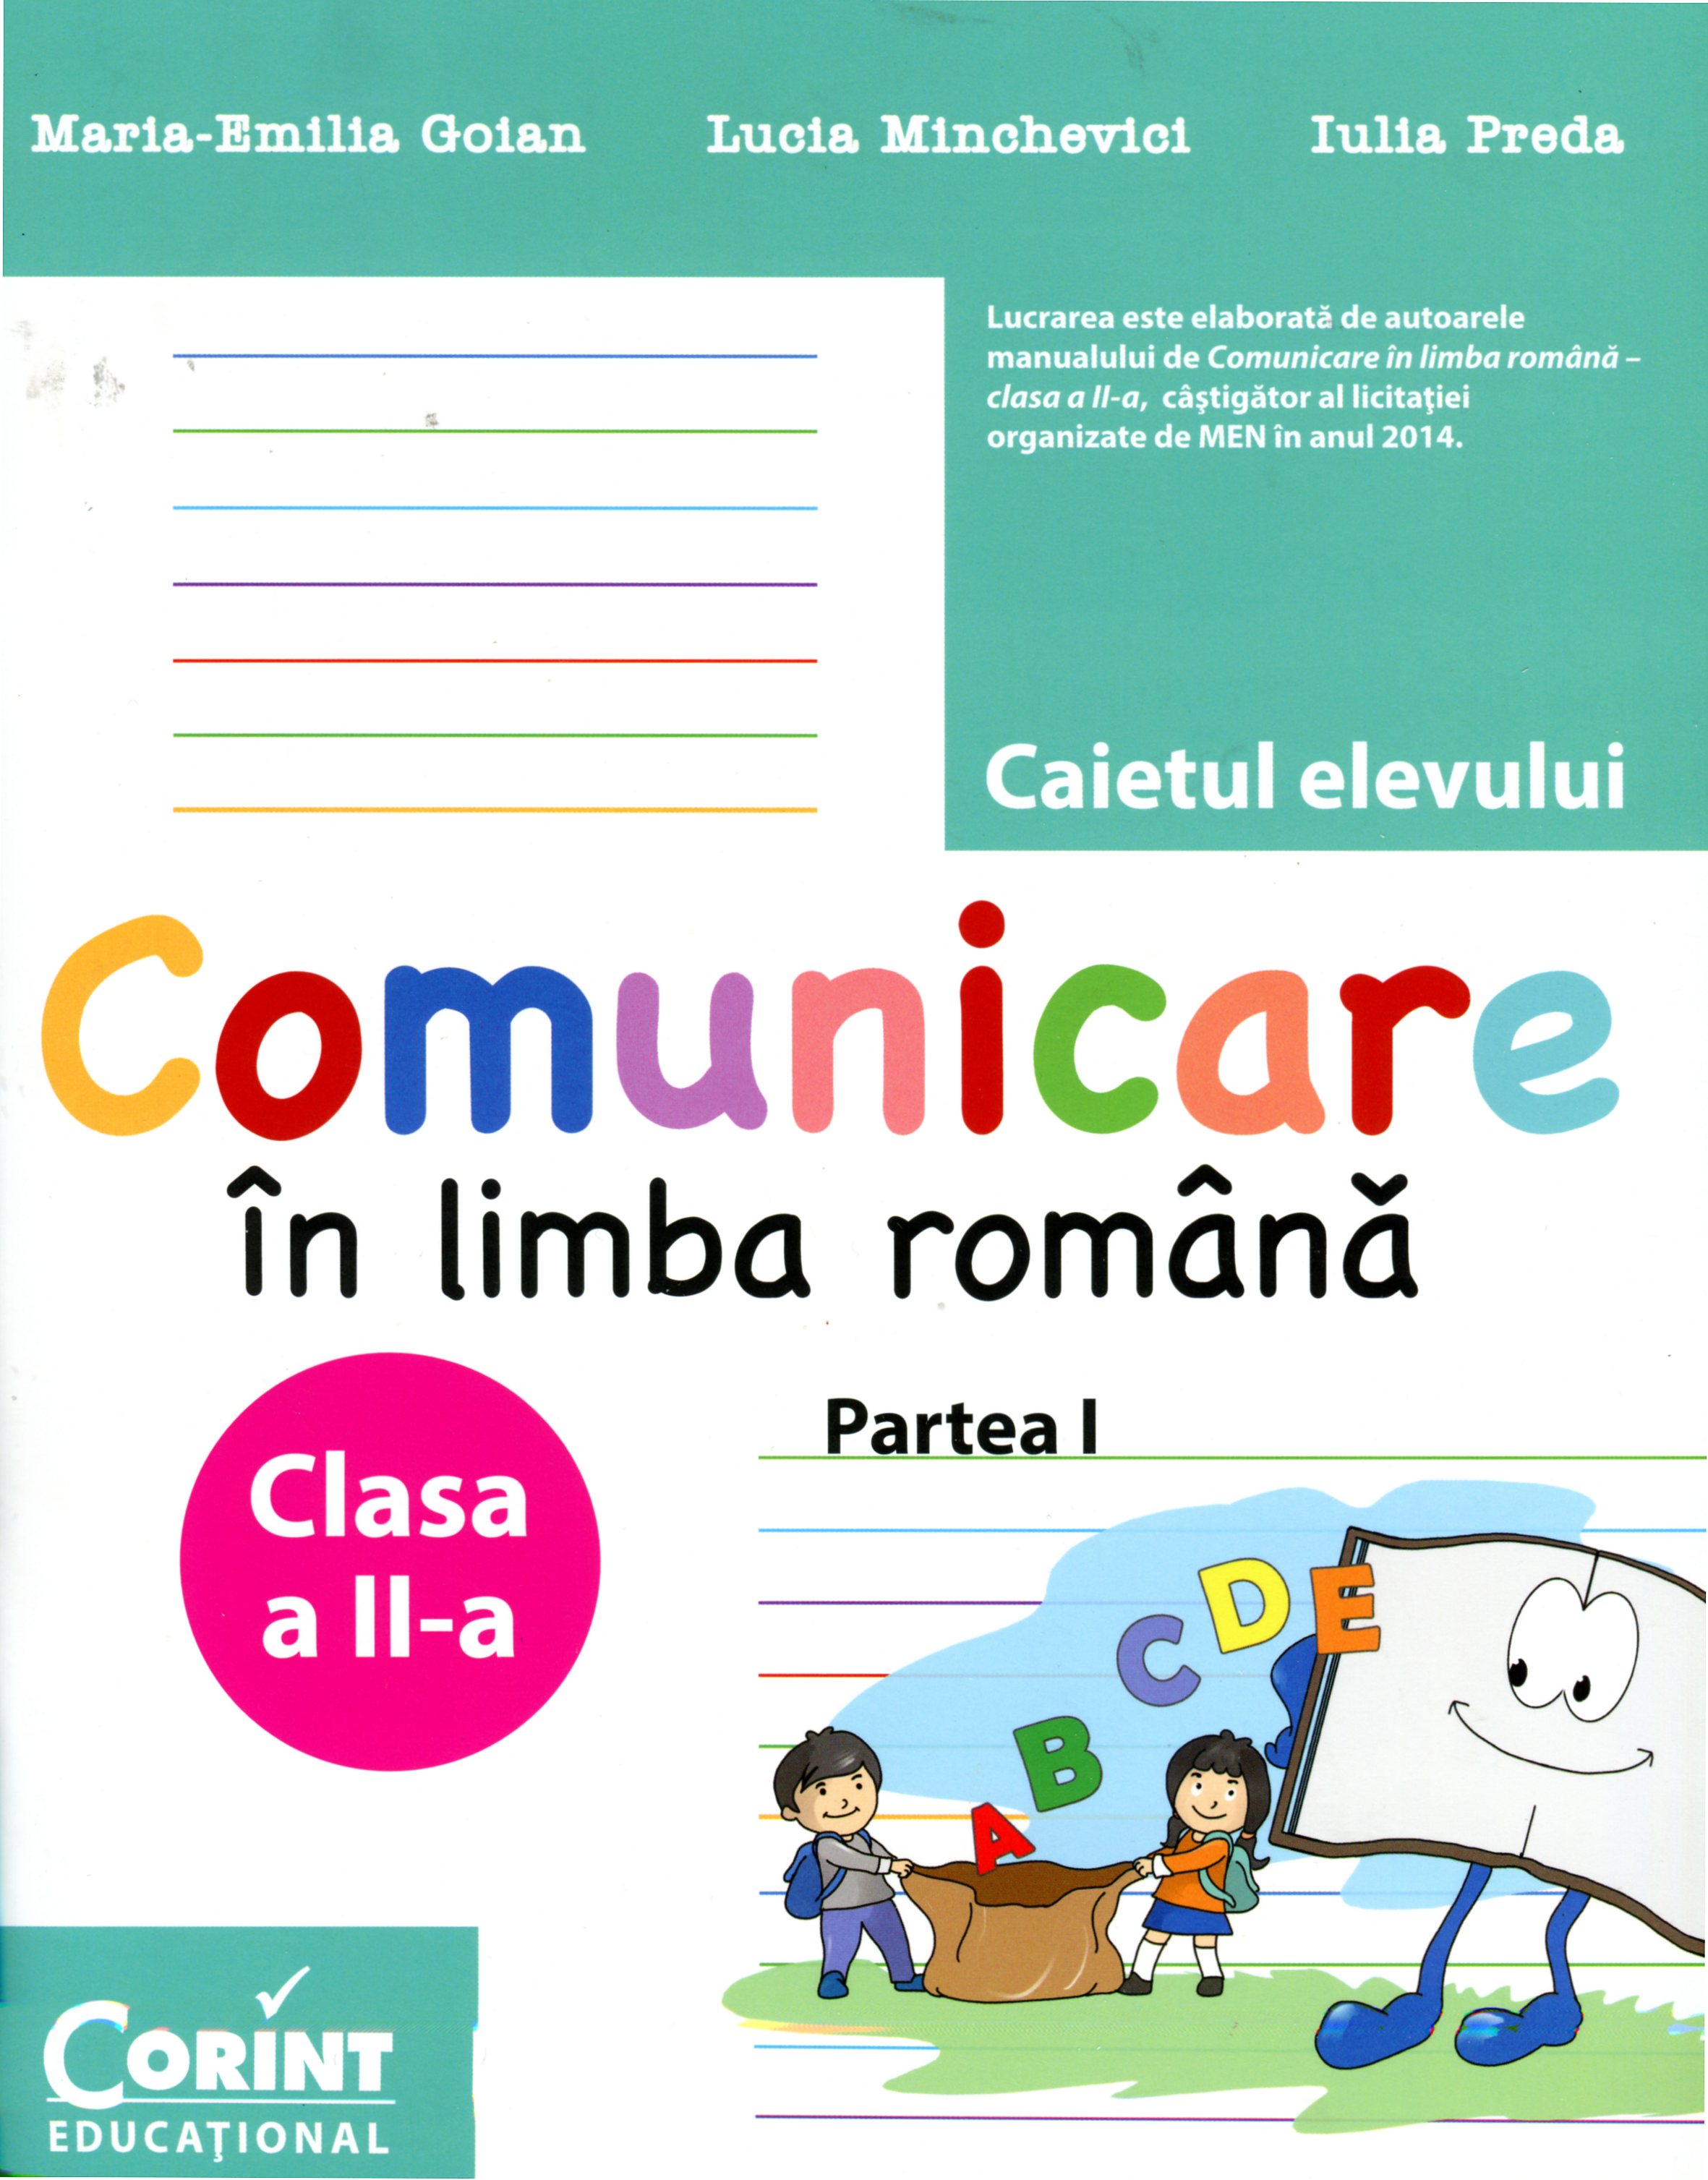 Comunicare in limba romana clasa 2 partea 1 caiet - Maria-Emilia Goian, Lucia Minchevici